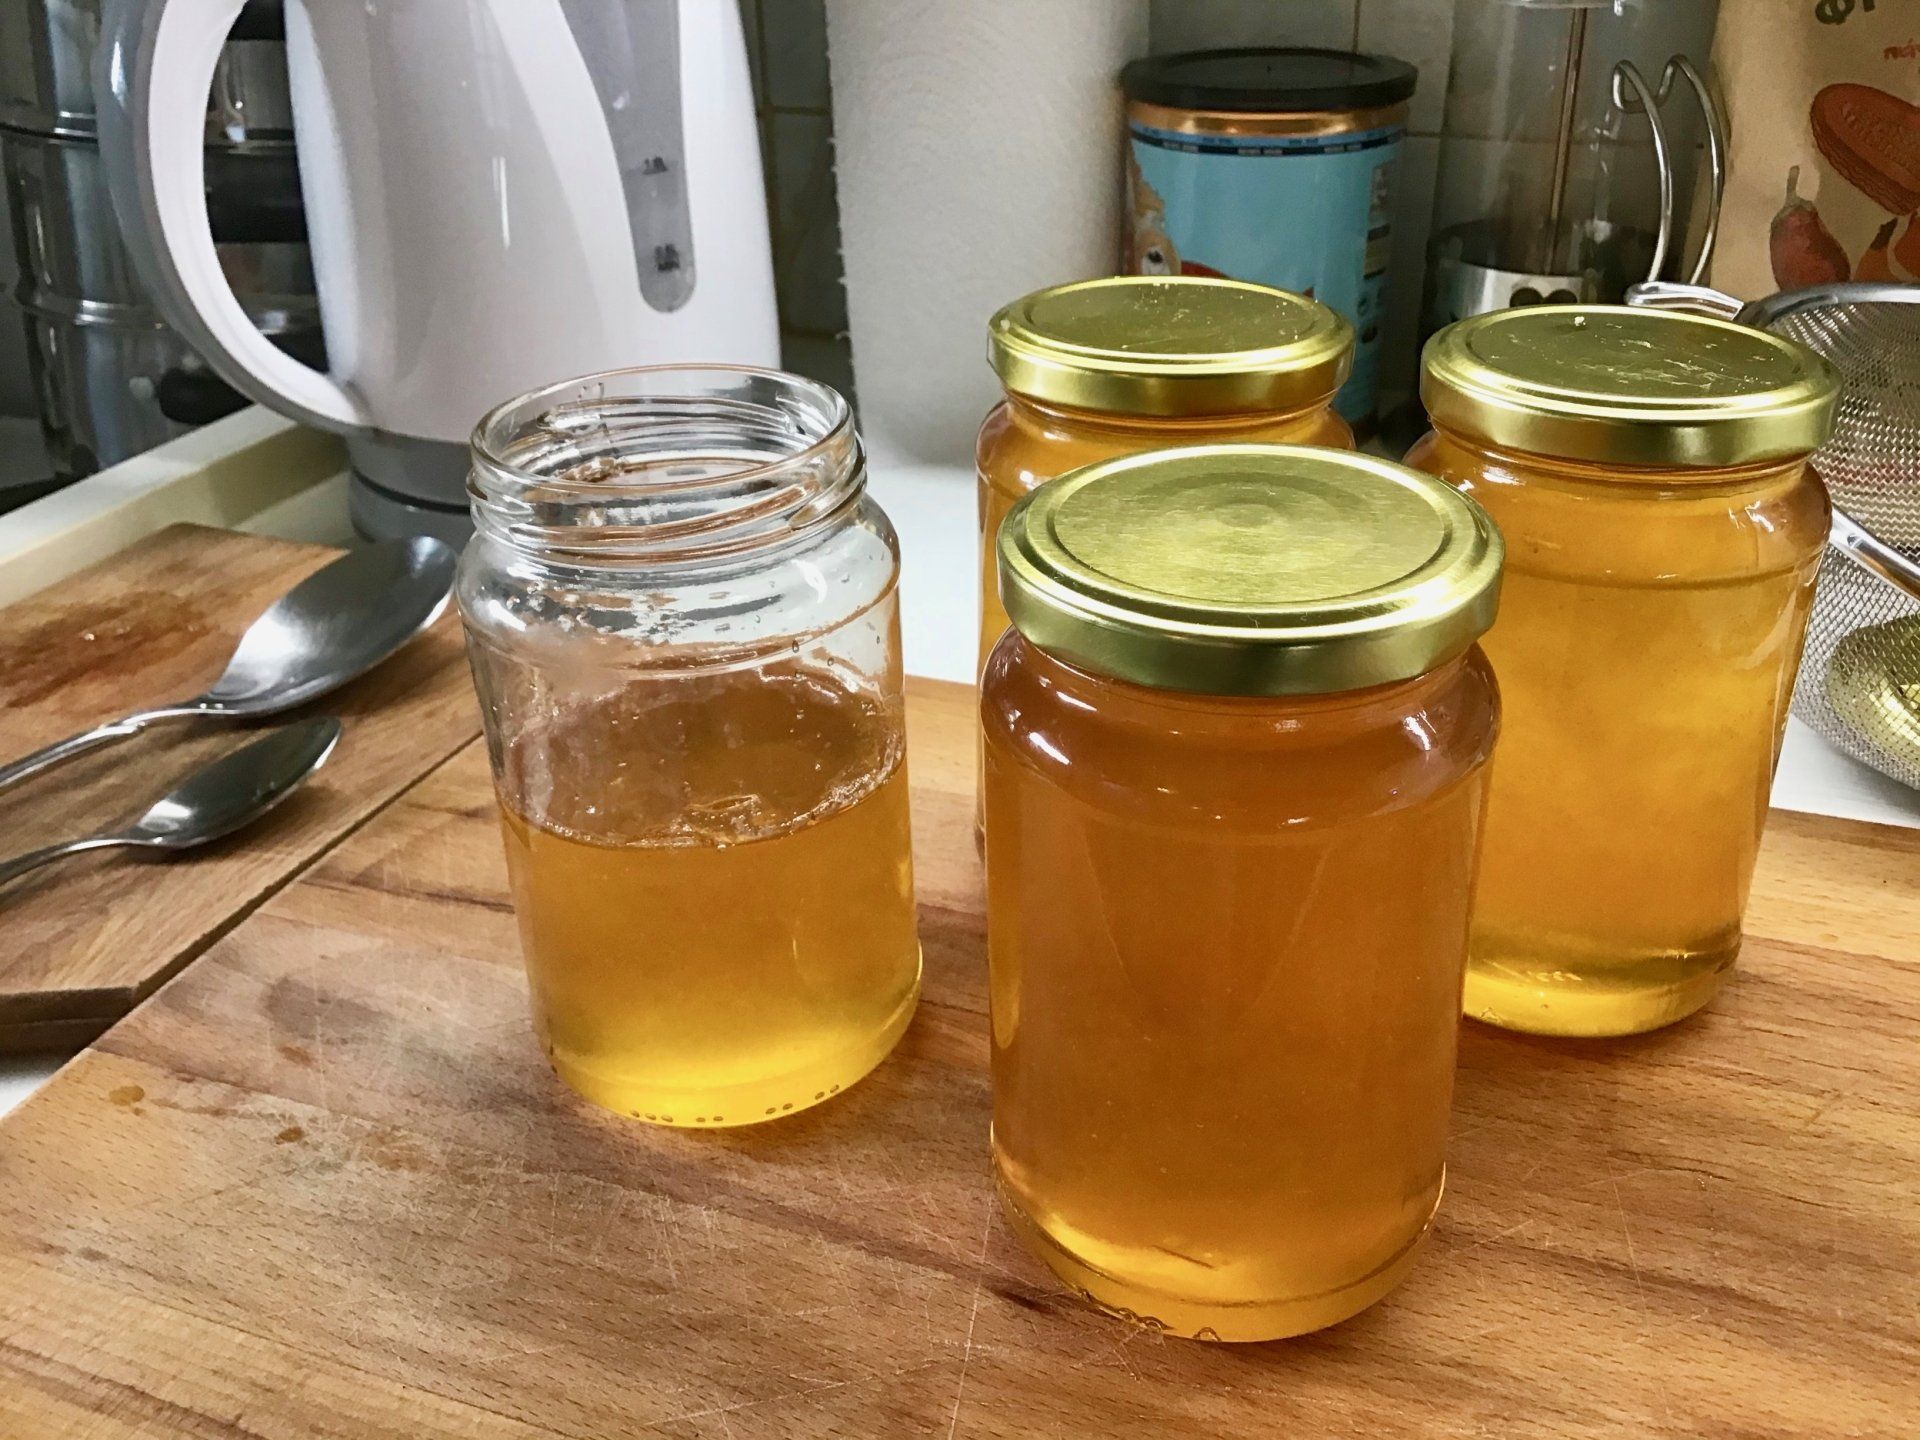 Jars of homemade Neranja Jelly - making marmalade on Hydra Island Greece.